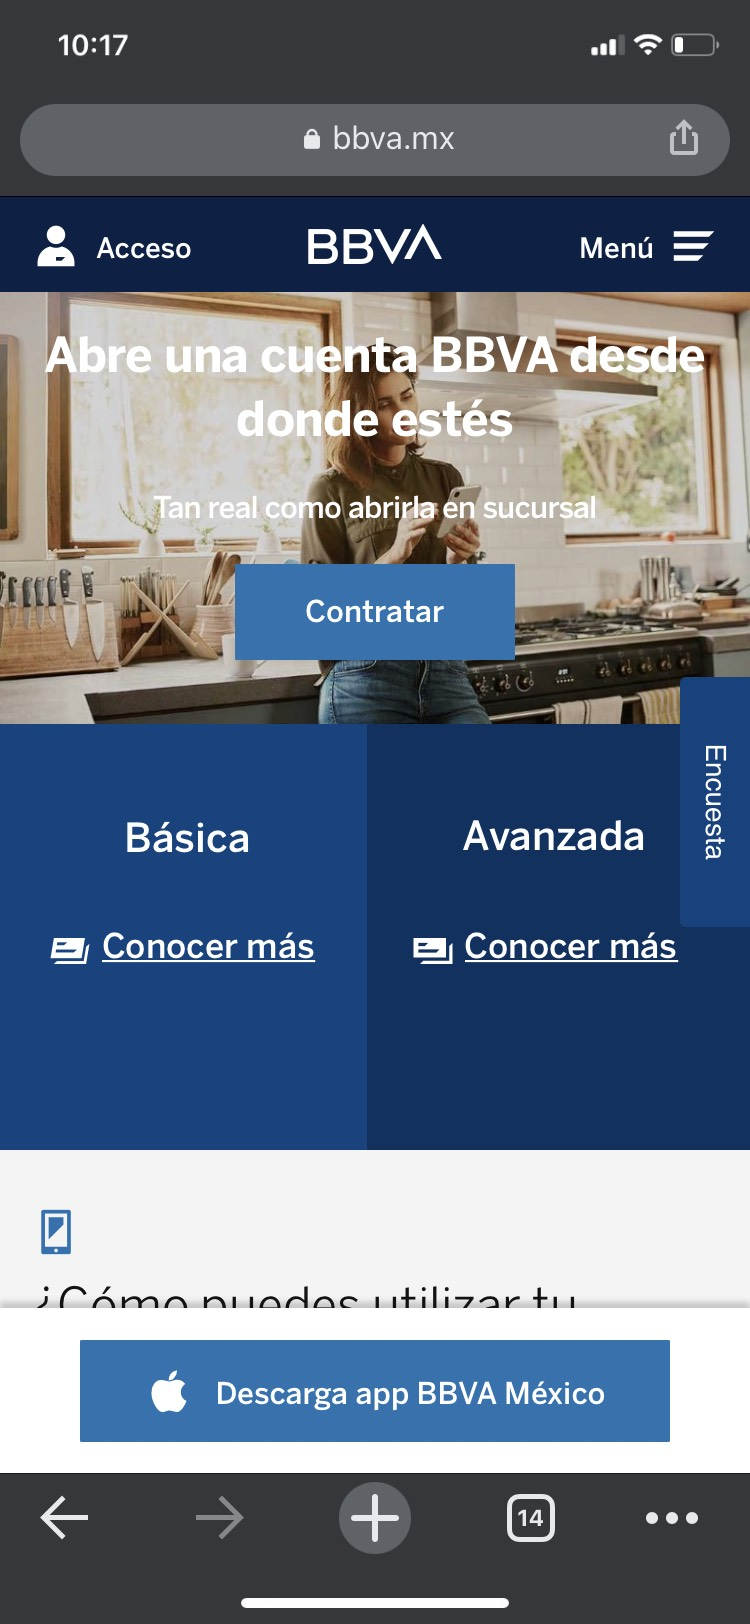 Tarjeta de débito en BBVA - promodescuentos.com